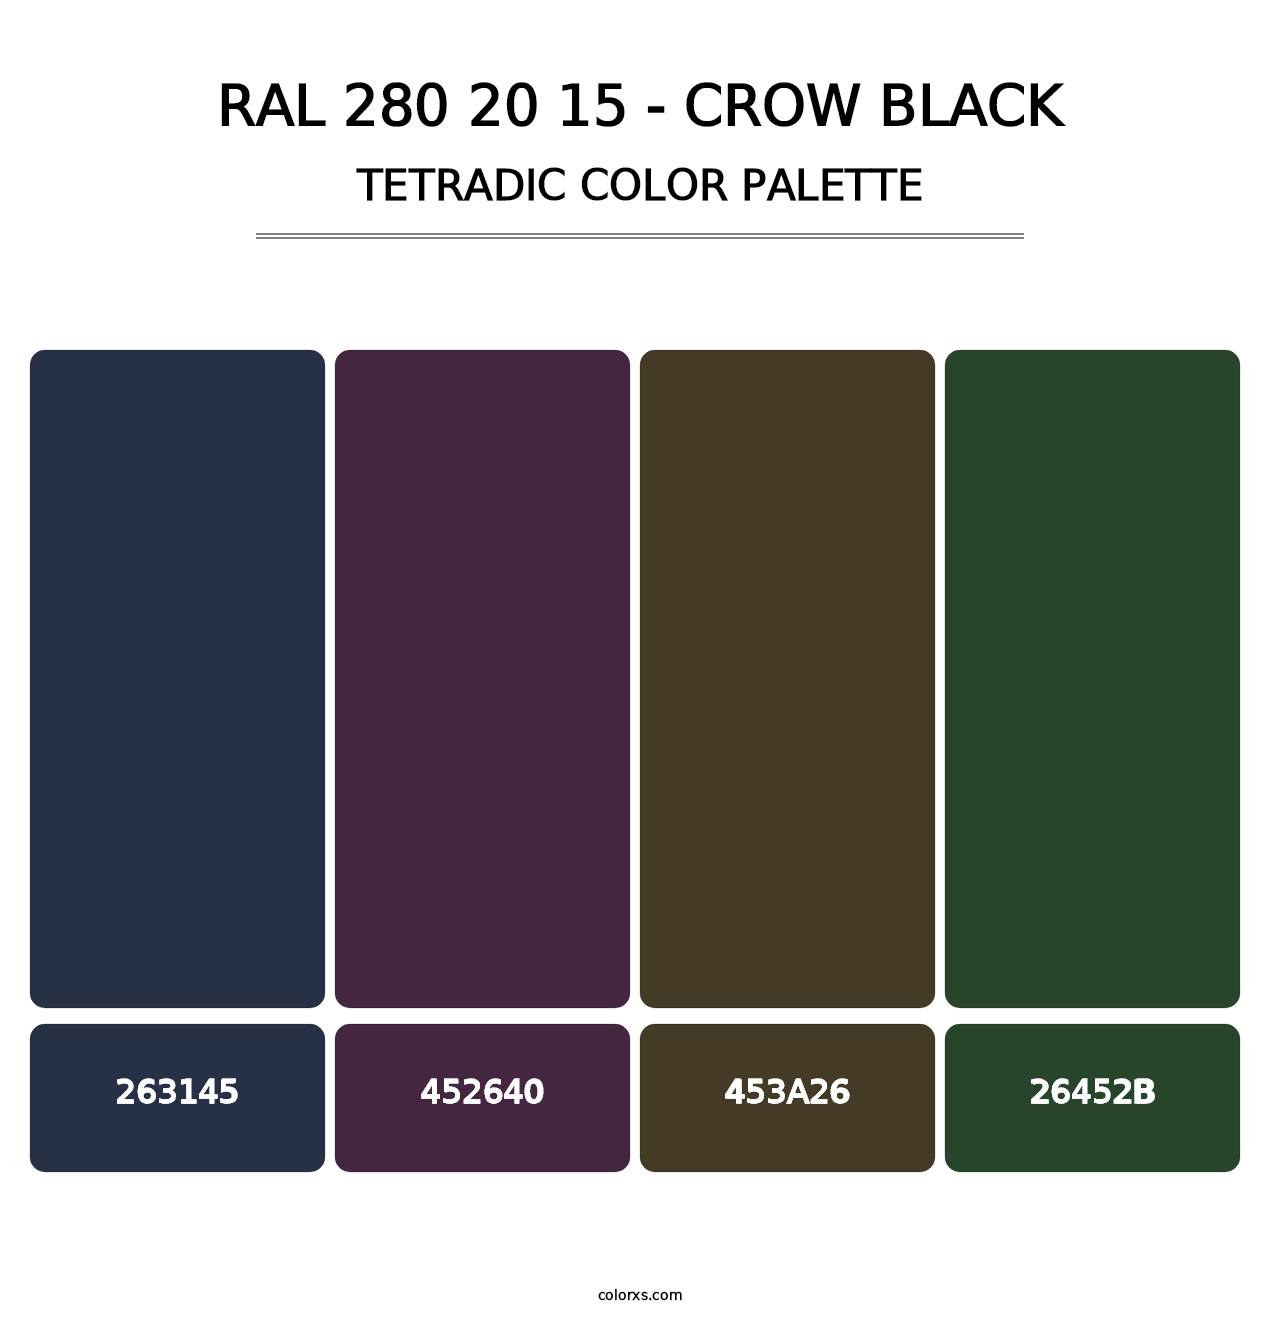 RAL 280 20 15 - Crow Black - Tetradic Color Palette